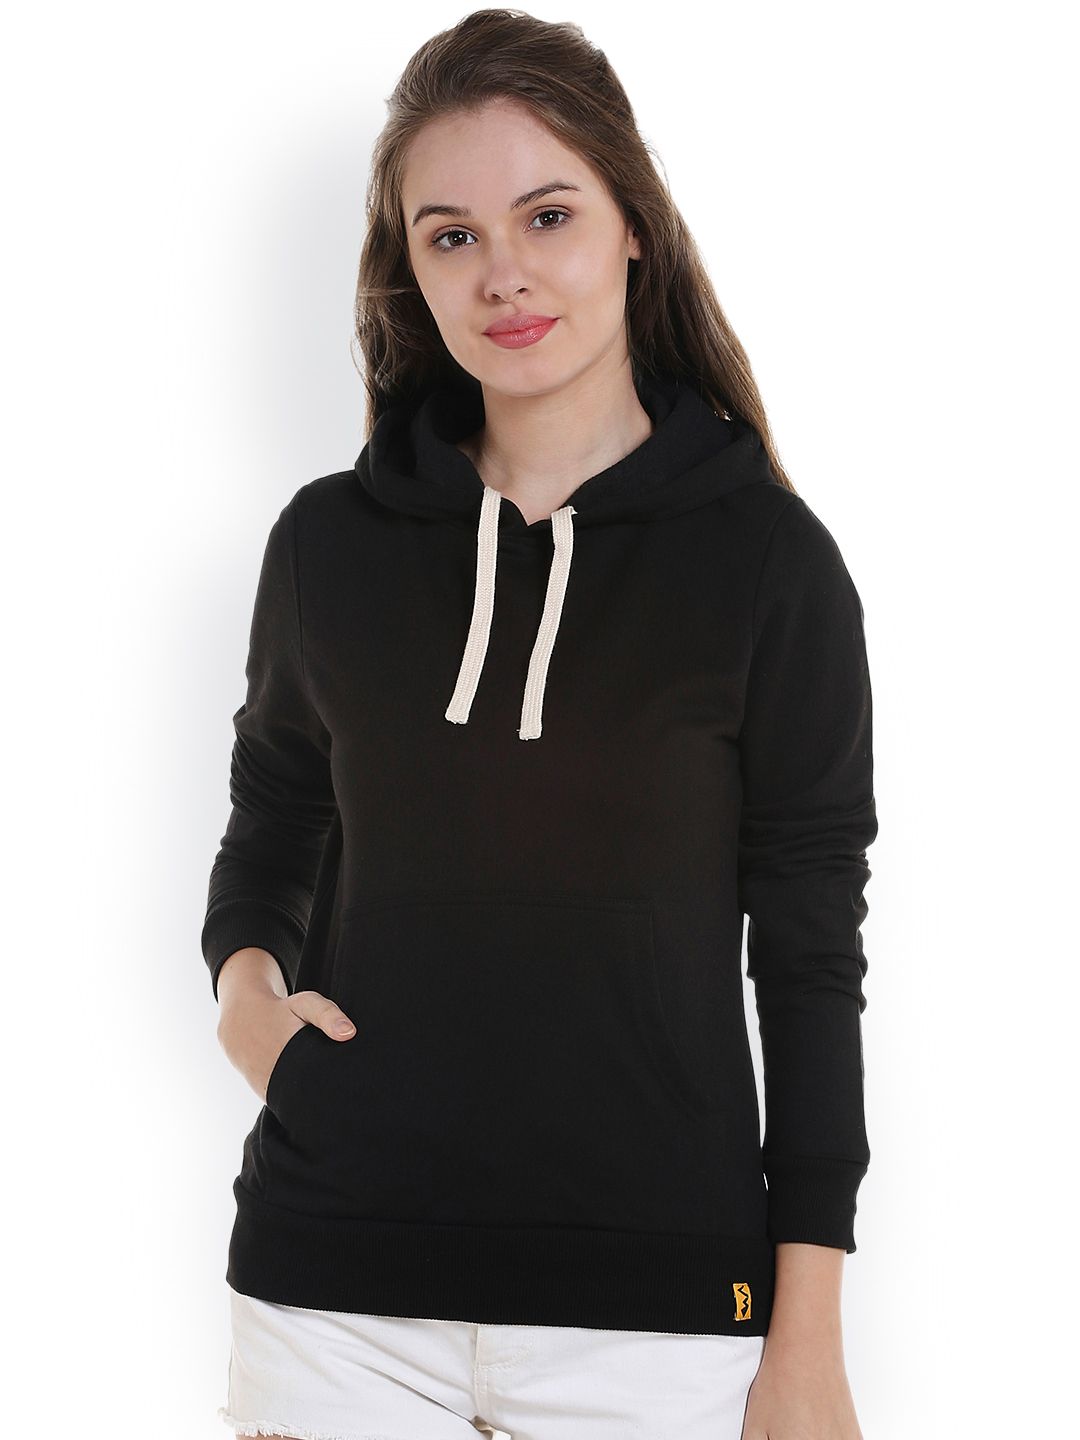 Campus Sutra Women Black Solid Hooded Sweatshirt Price in India